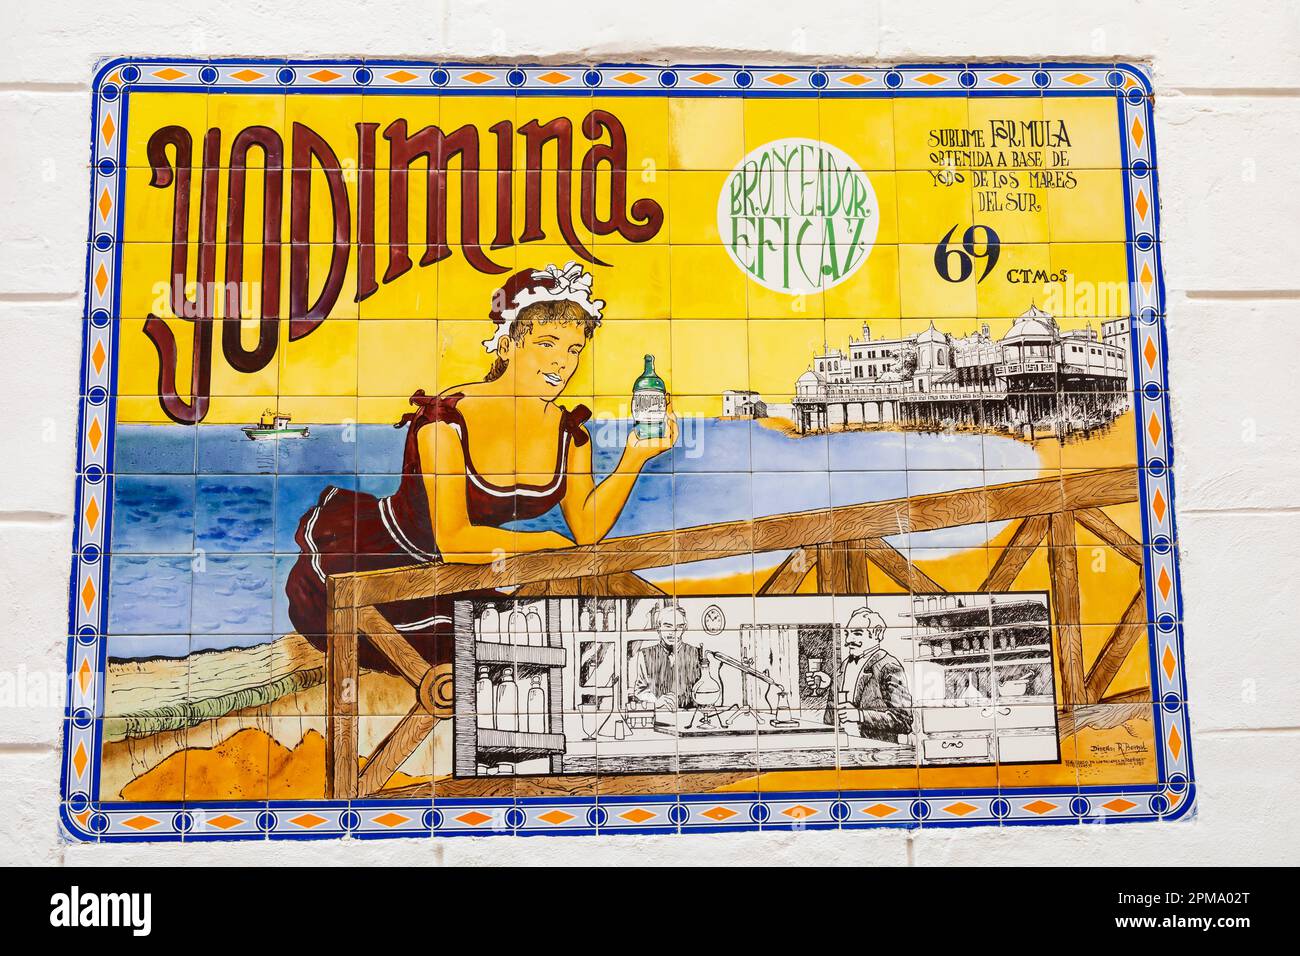 Ceramic Tiled advertising sign for Yodimina suntan lotion cream., Cadiz, Andalusia, Spain Stock Photo